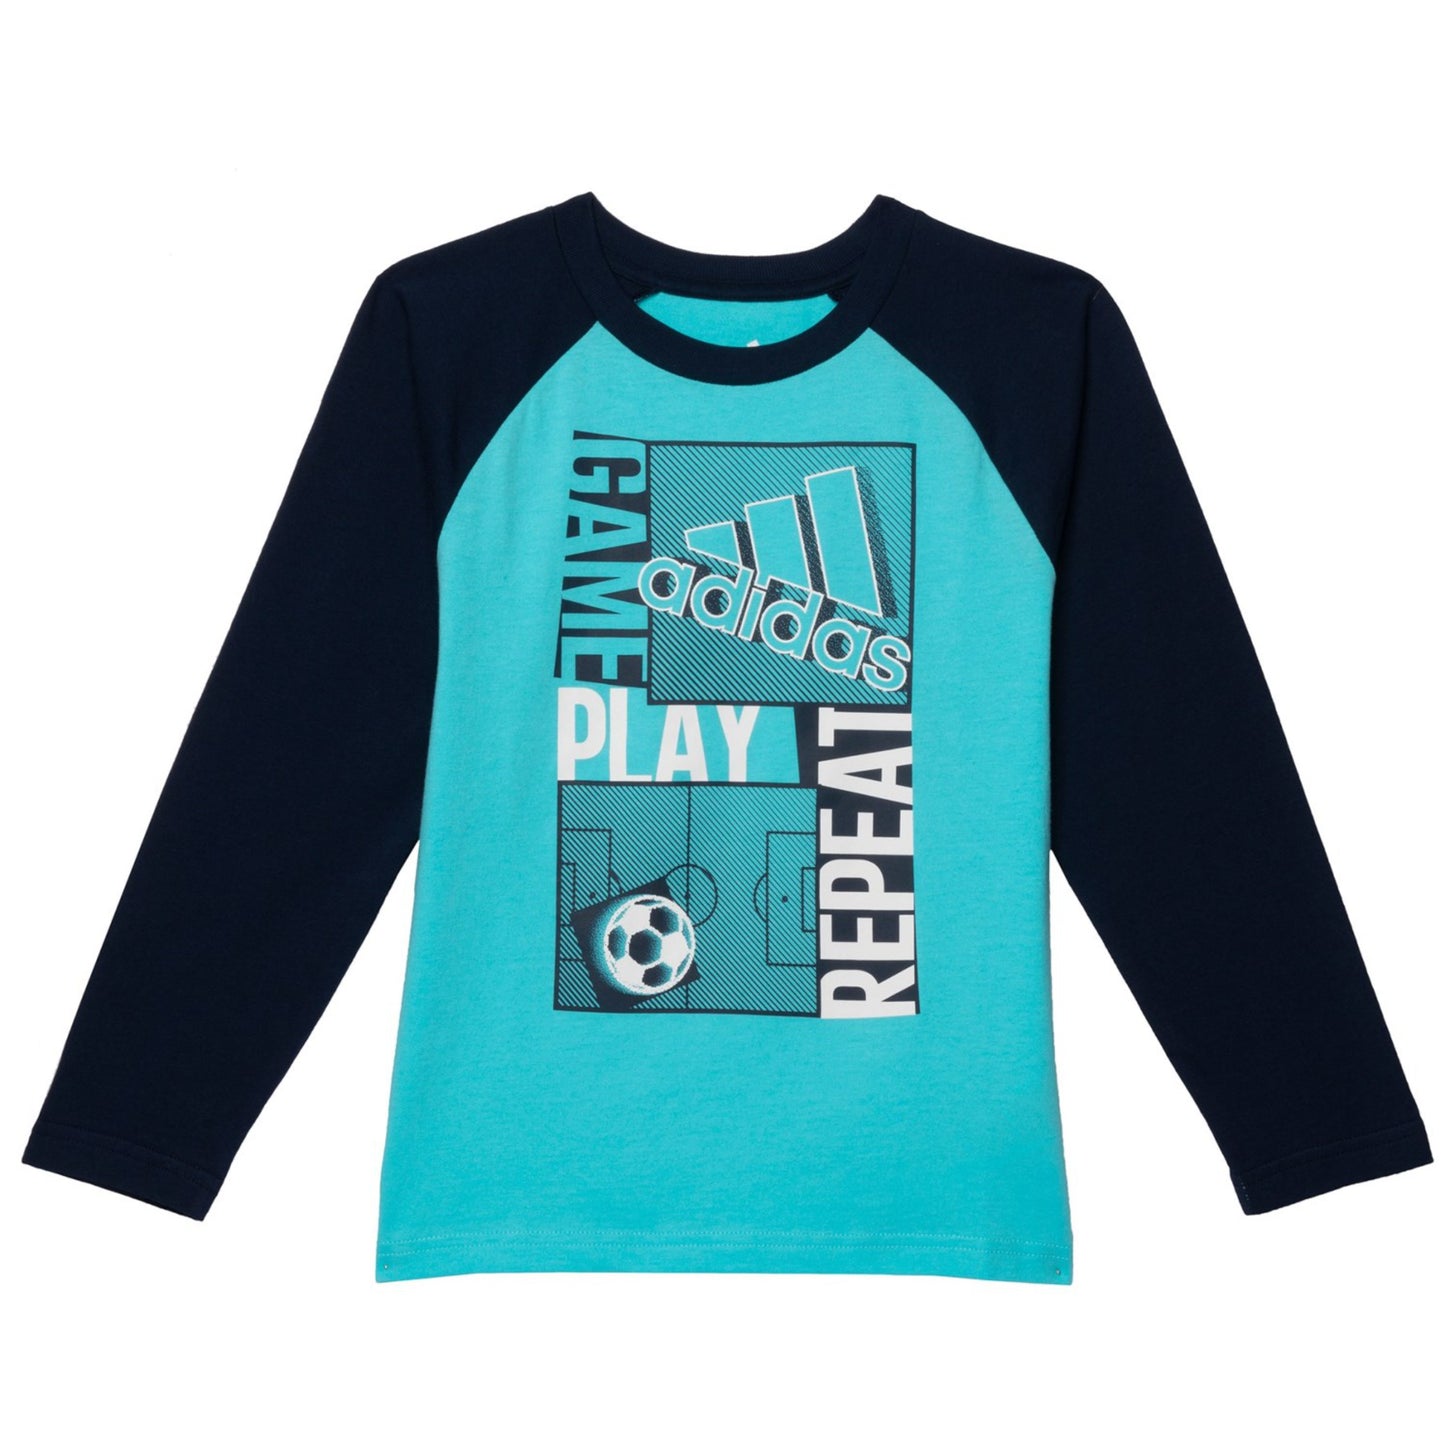 Adidas Boy's Play Game Graphic Print Raglan Long Sleeve Tee Casual Active T-Shirt